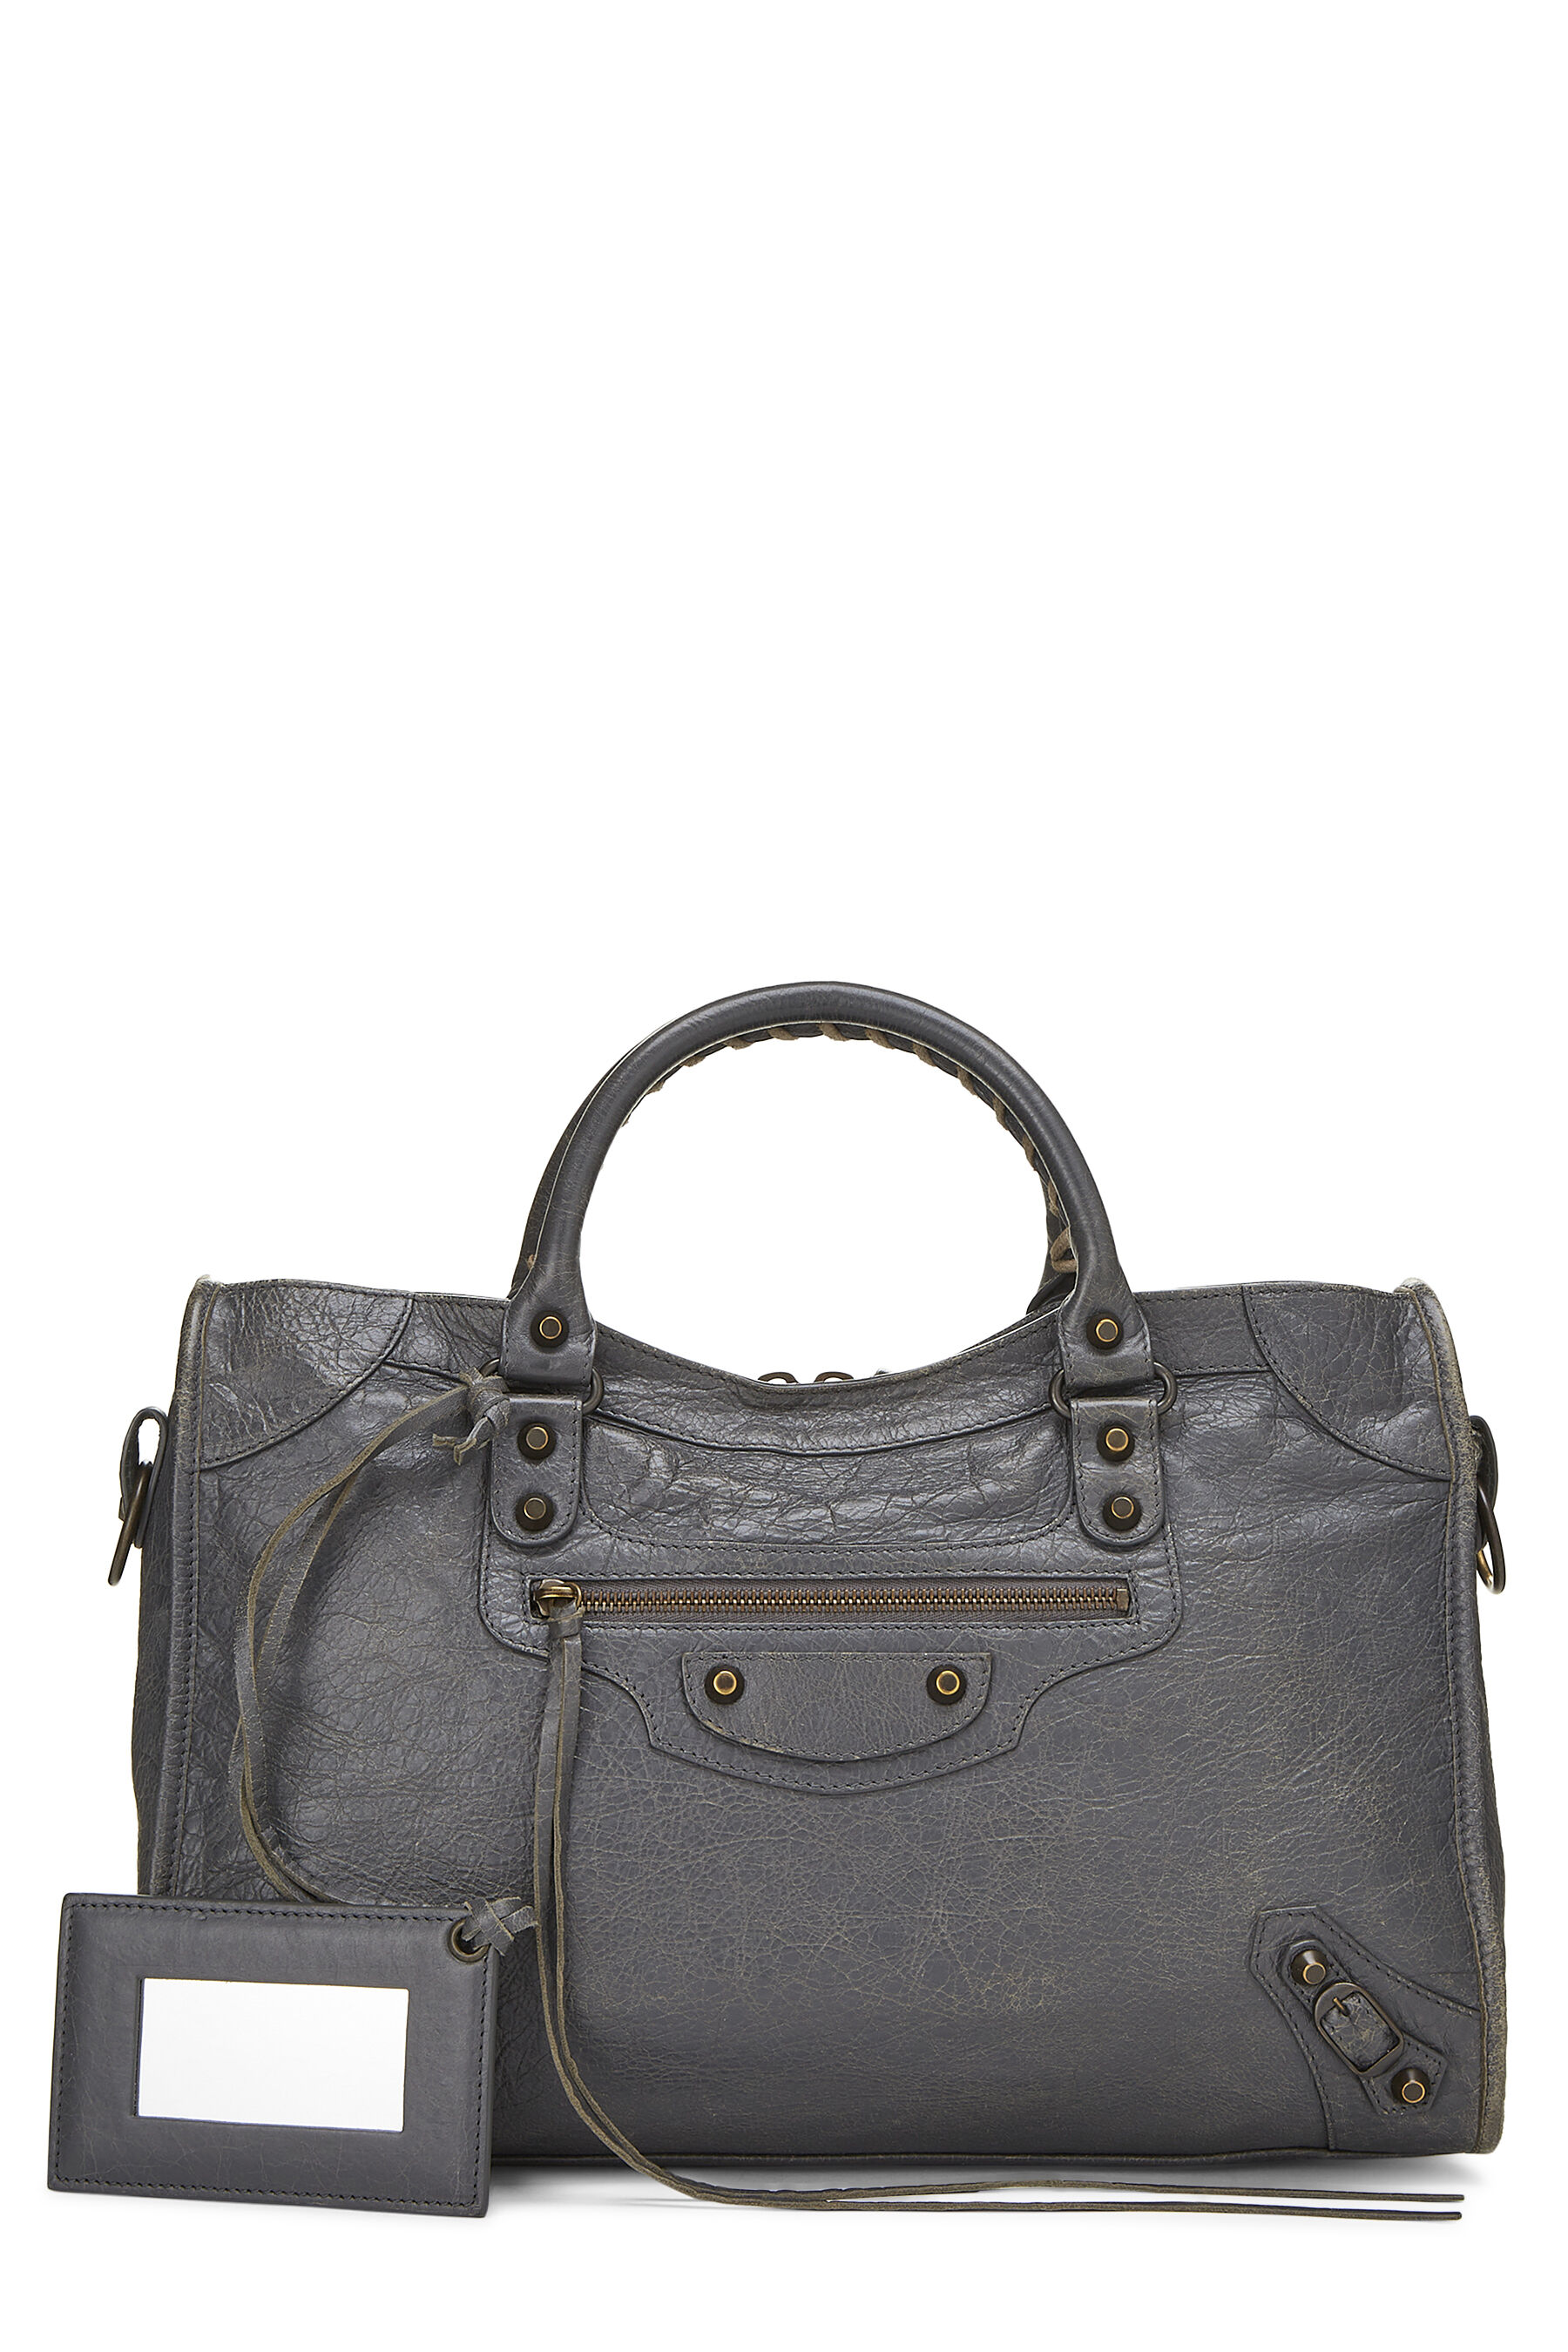 Balenciaga Grey Agneau Classic Bag Q0B0FQ01EB001 | WGACA